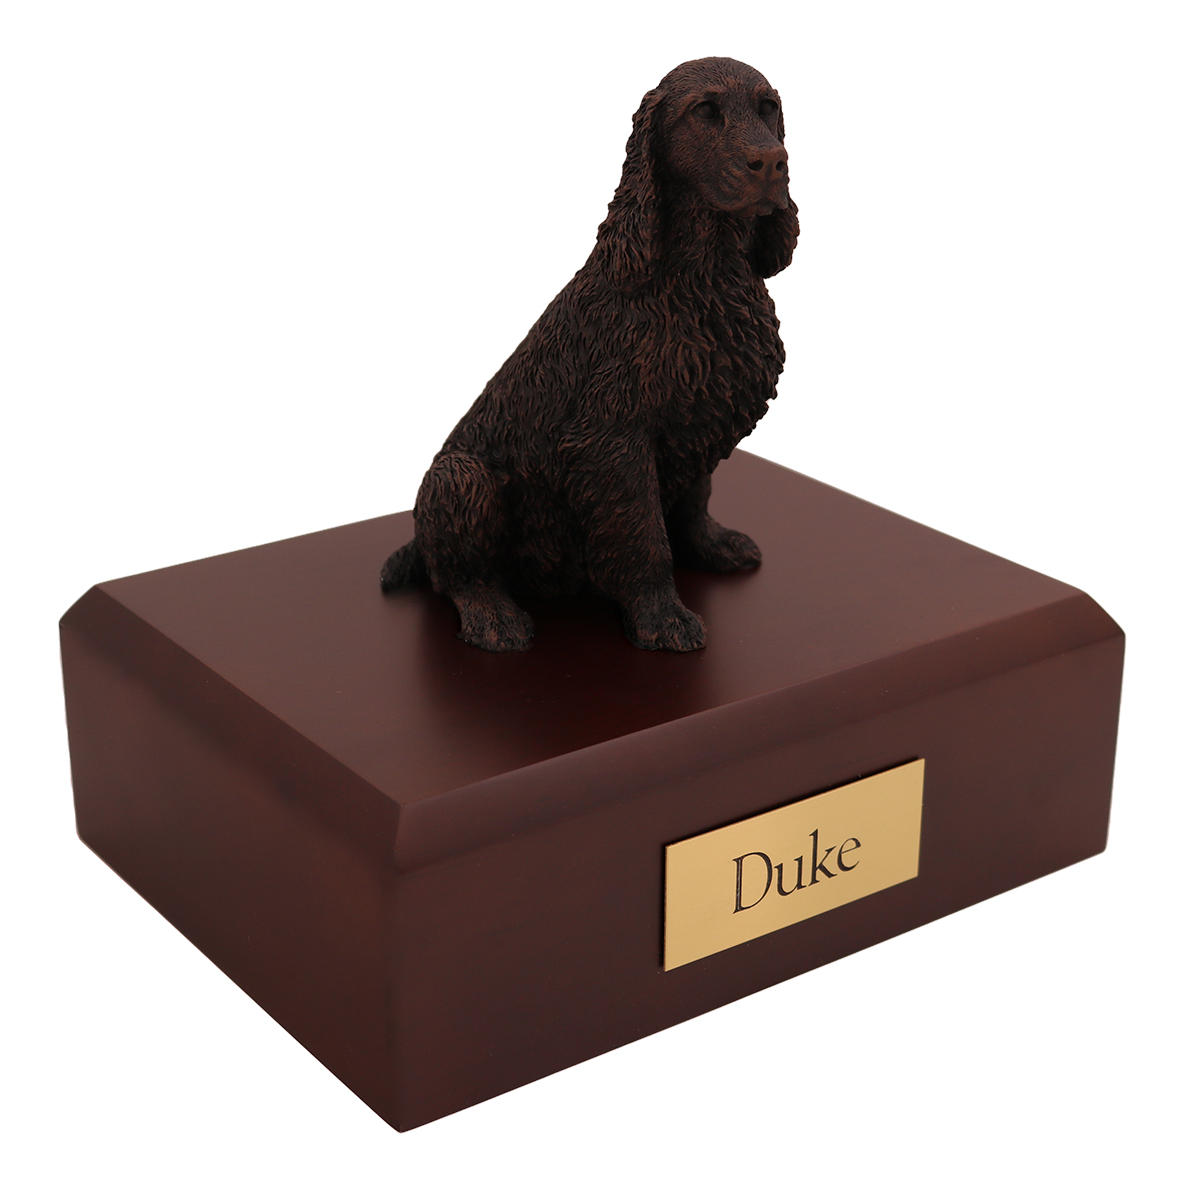 Dog, Springer Spaniel, Bronze - Figurine Urn